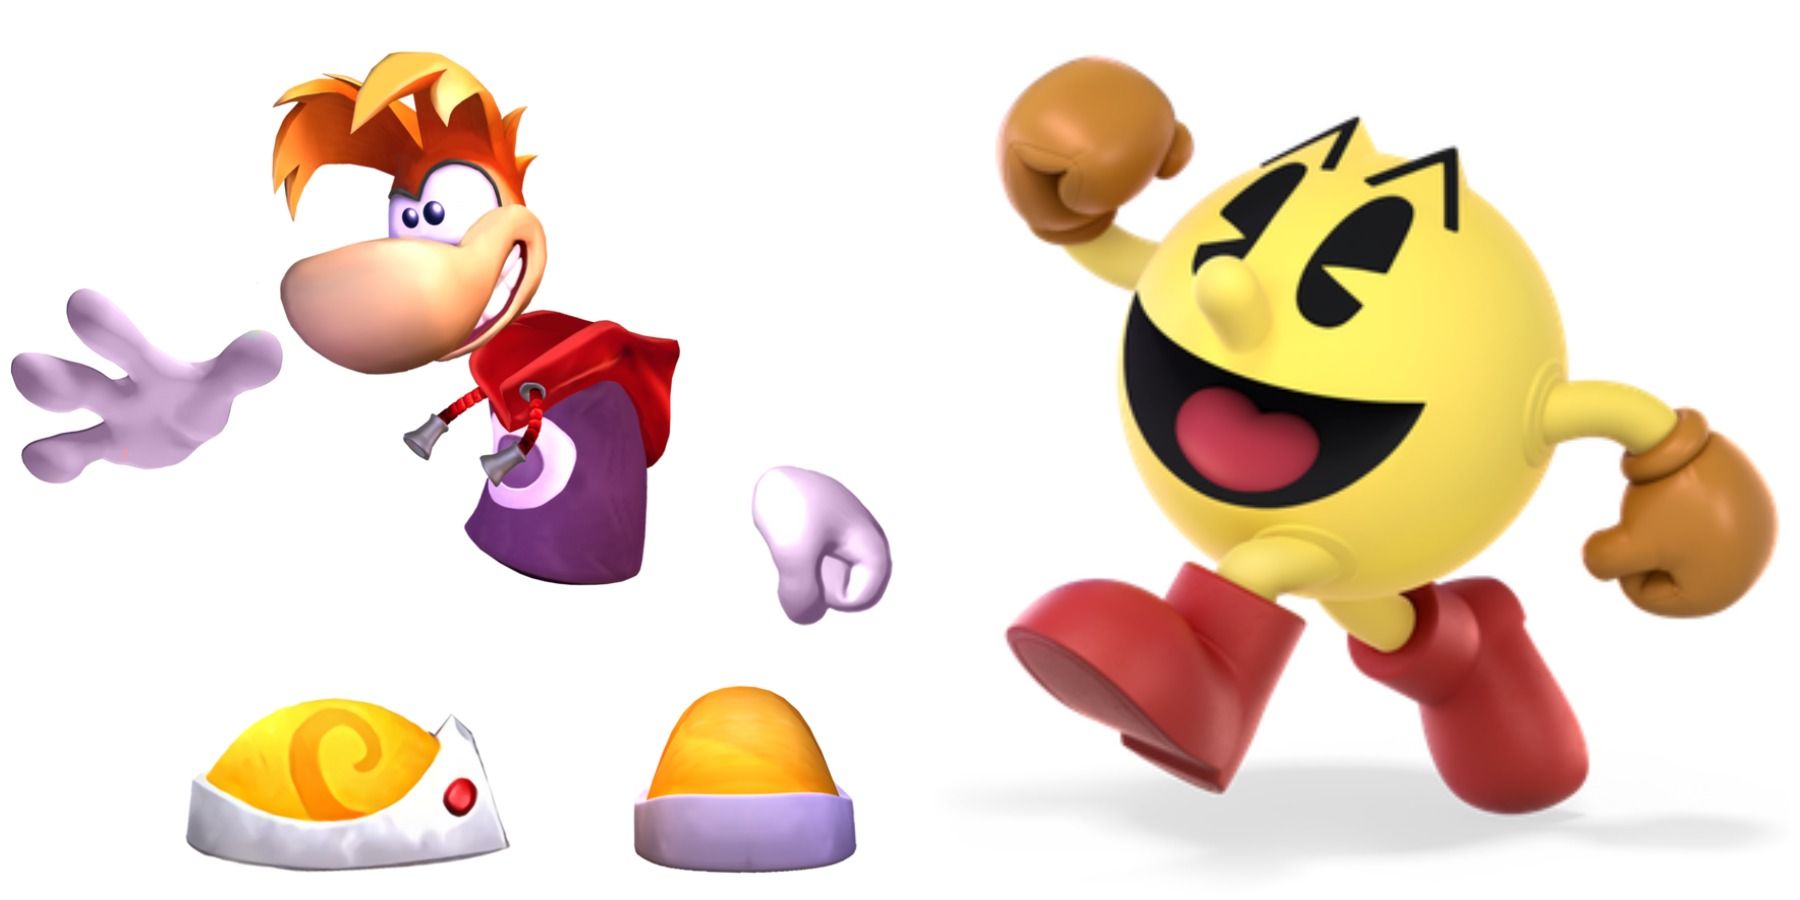 (Left) Rayman waving (Right) Pac-Man walking